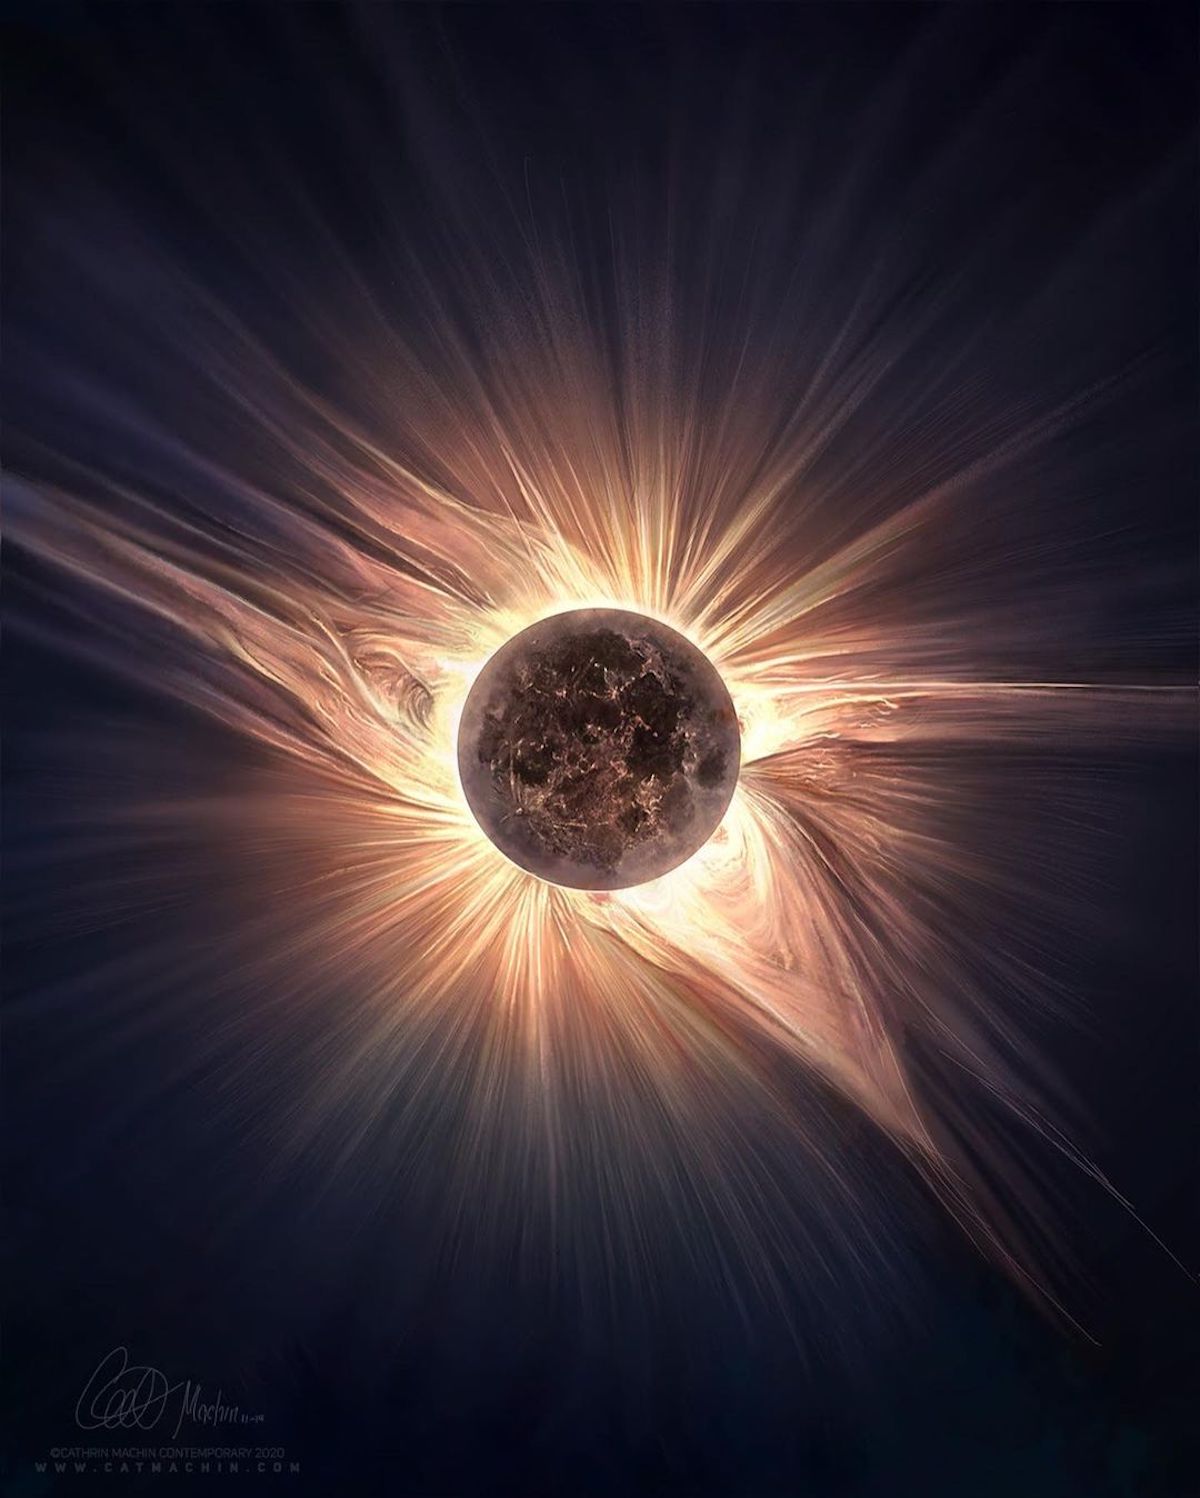 pintura digital de eclipse solar por Cathrin Machin